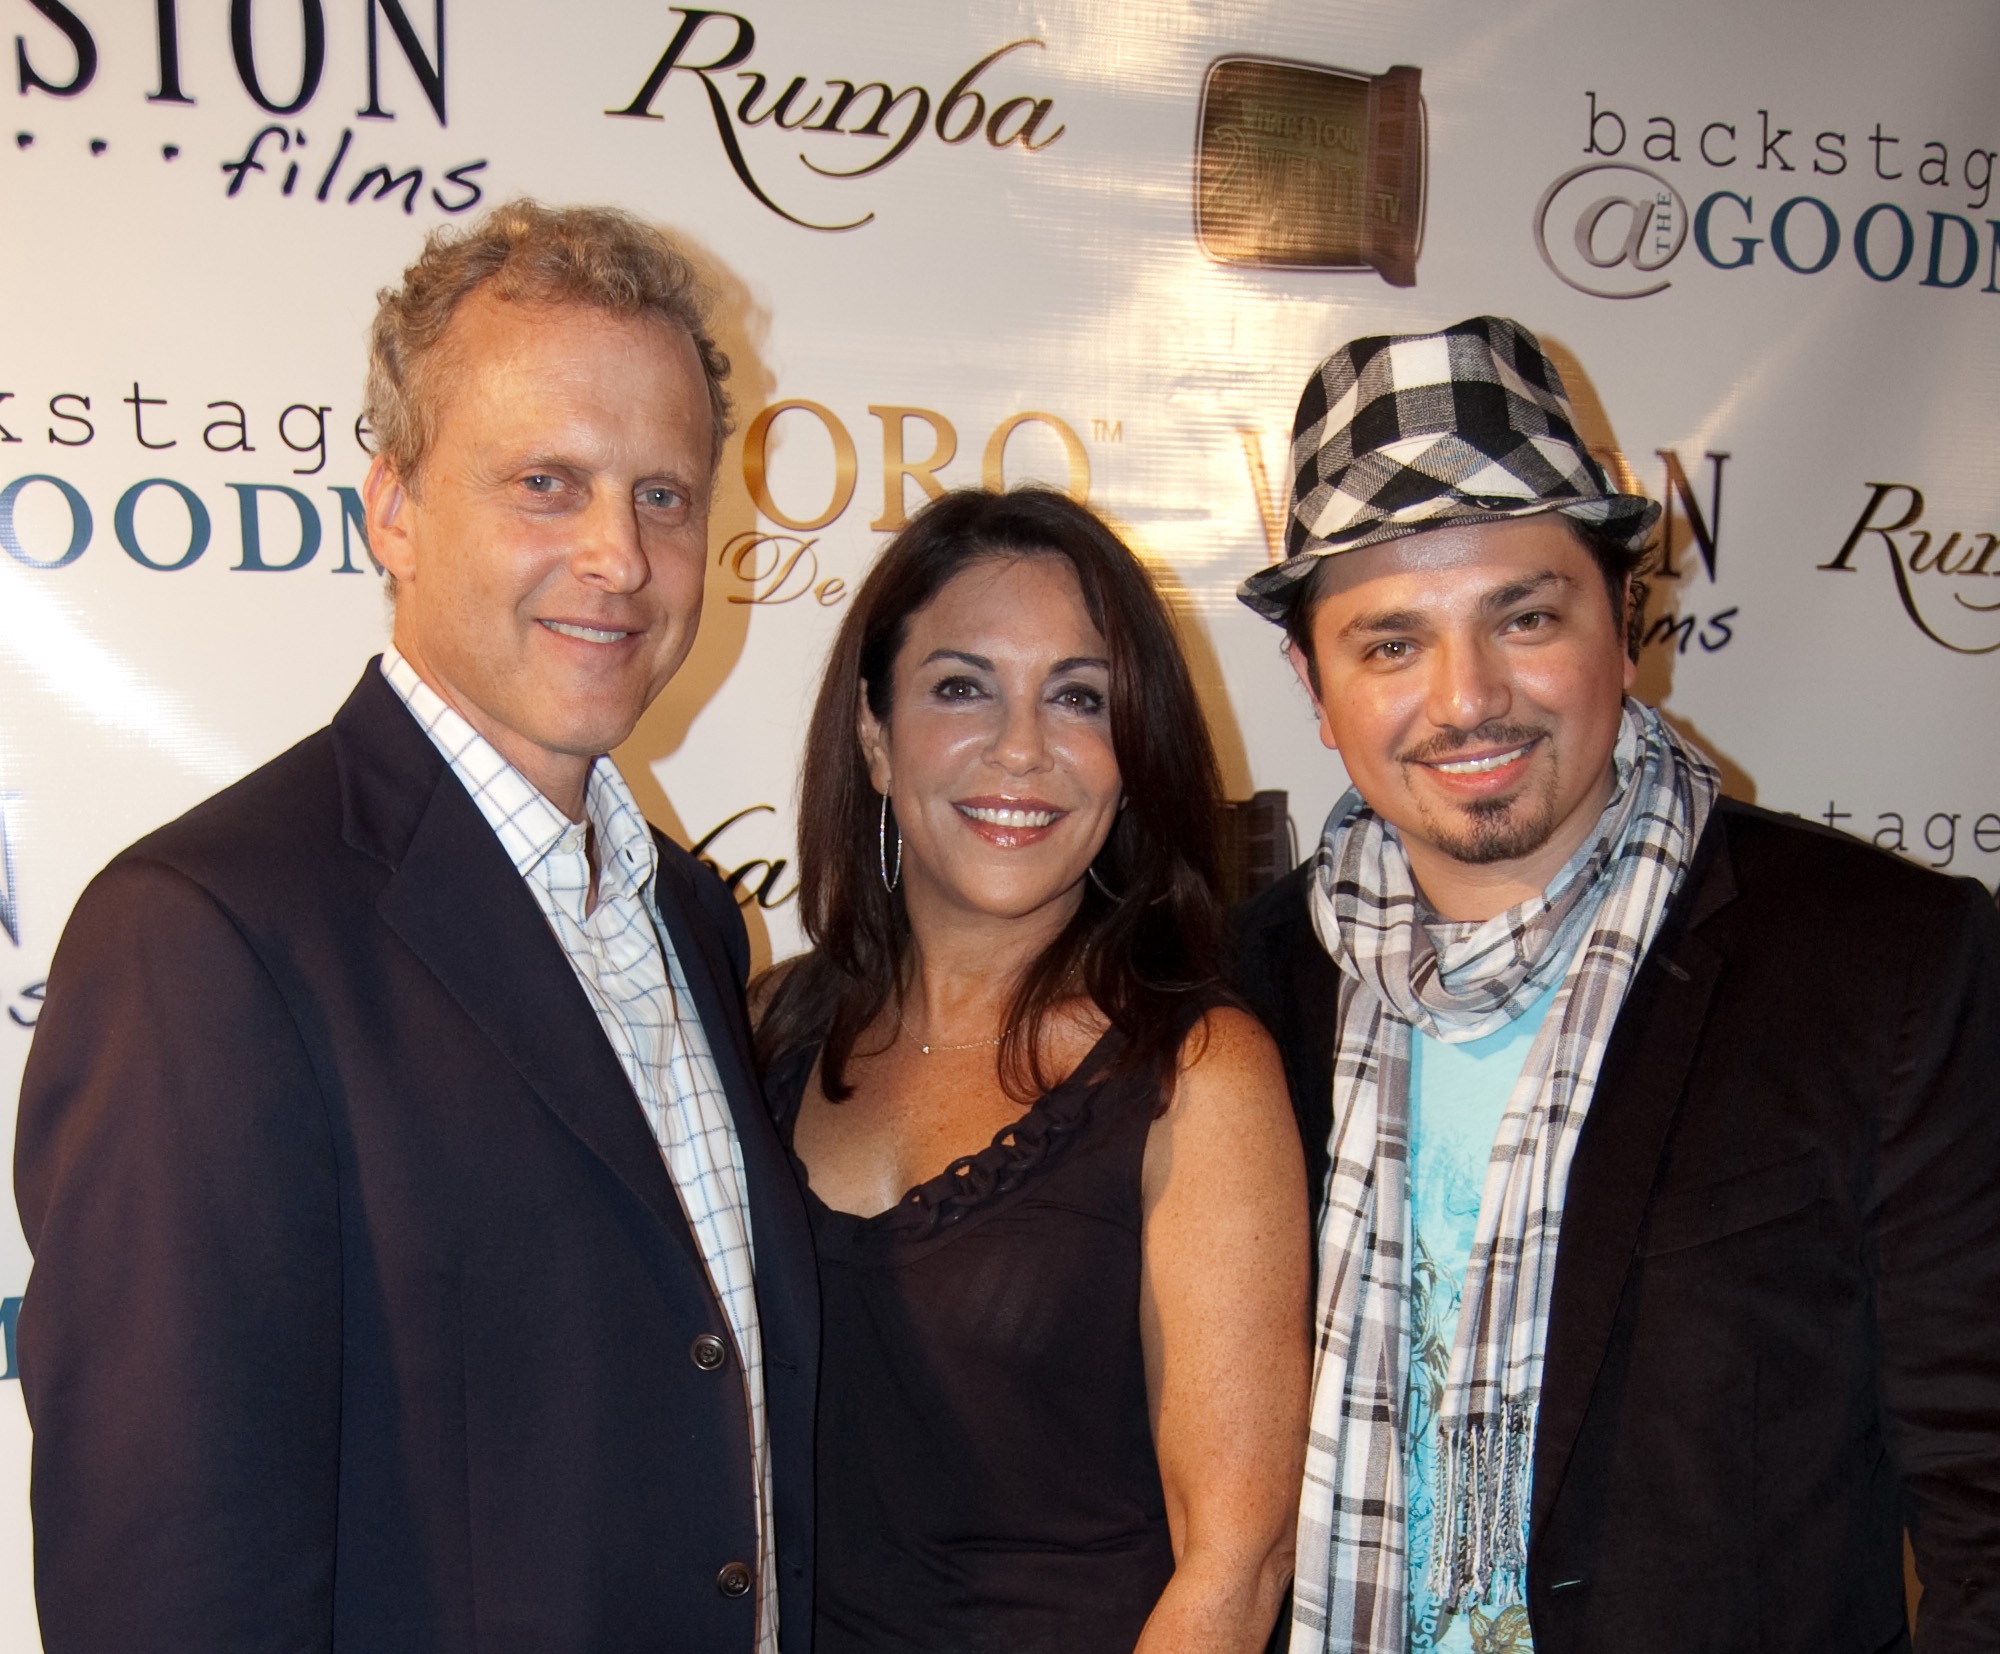 BackstageAtTheGoodman.com Red Carpet Event. Bob Sirott, Marianne Murciano, producer Johnny Arreola(left to right)